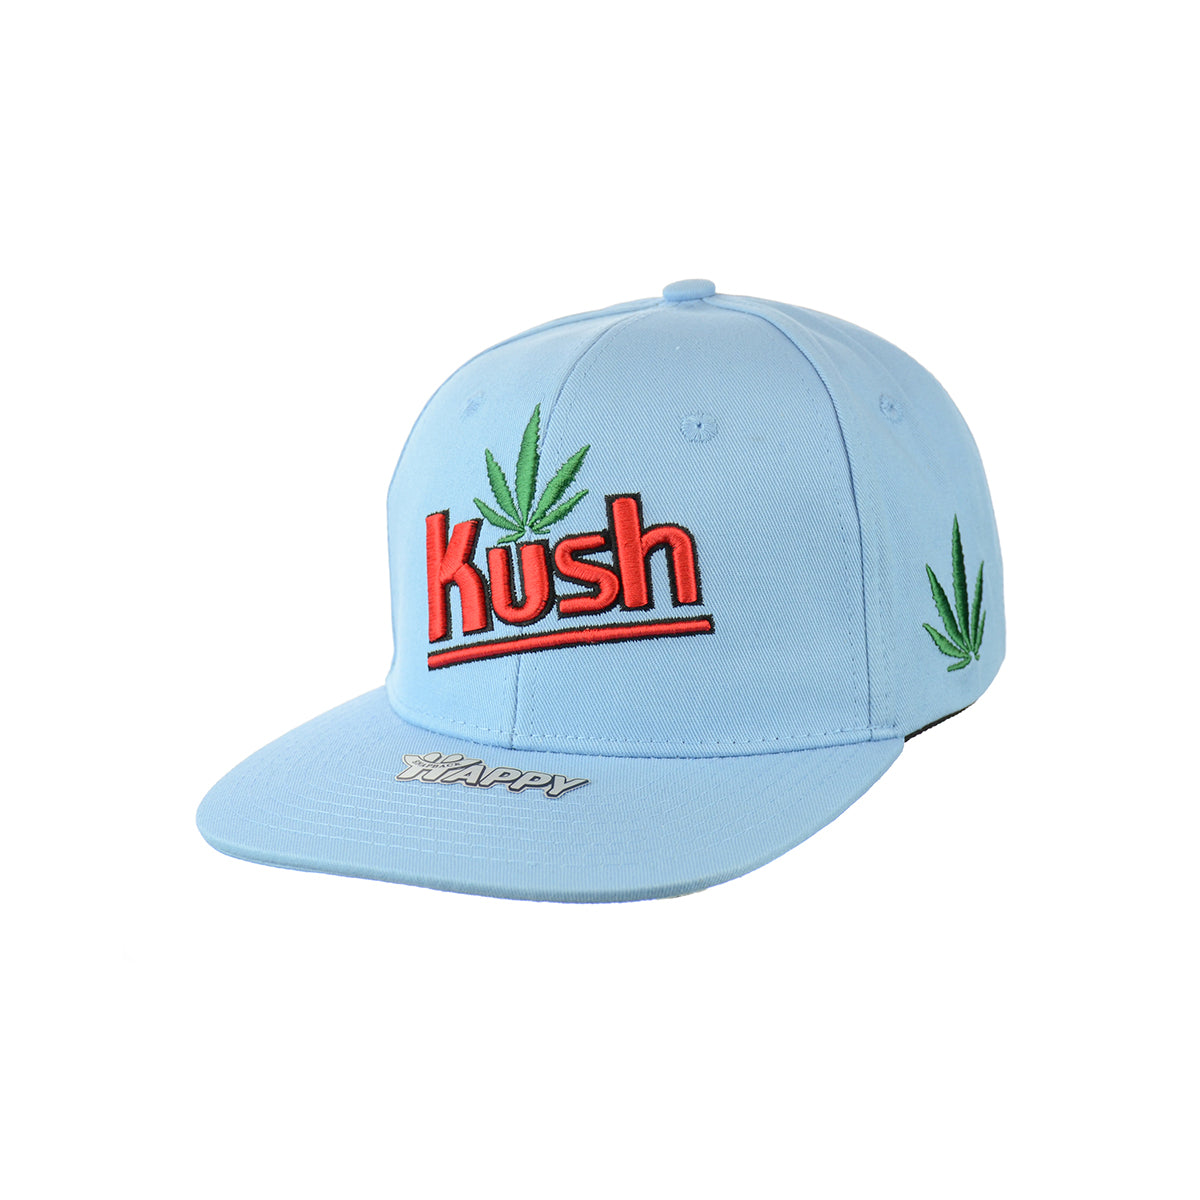 Kush Leaf Embroidered Snapback Hat 100% Cotton